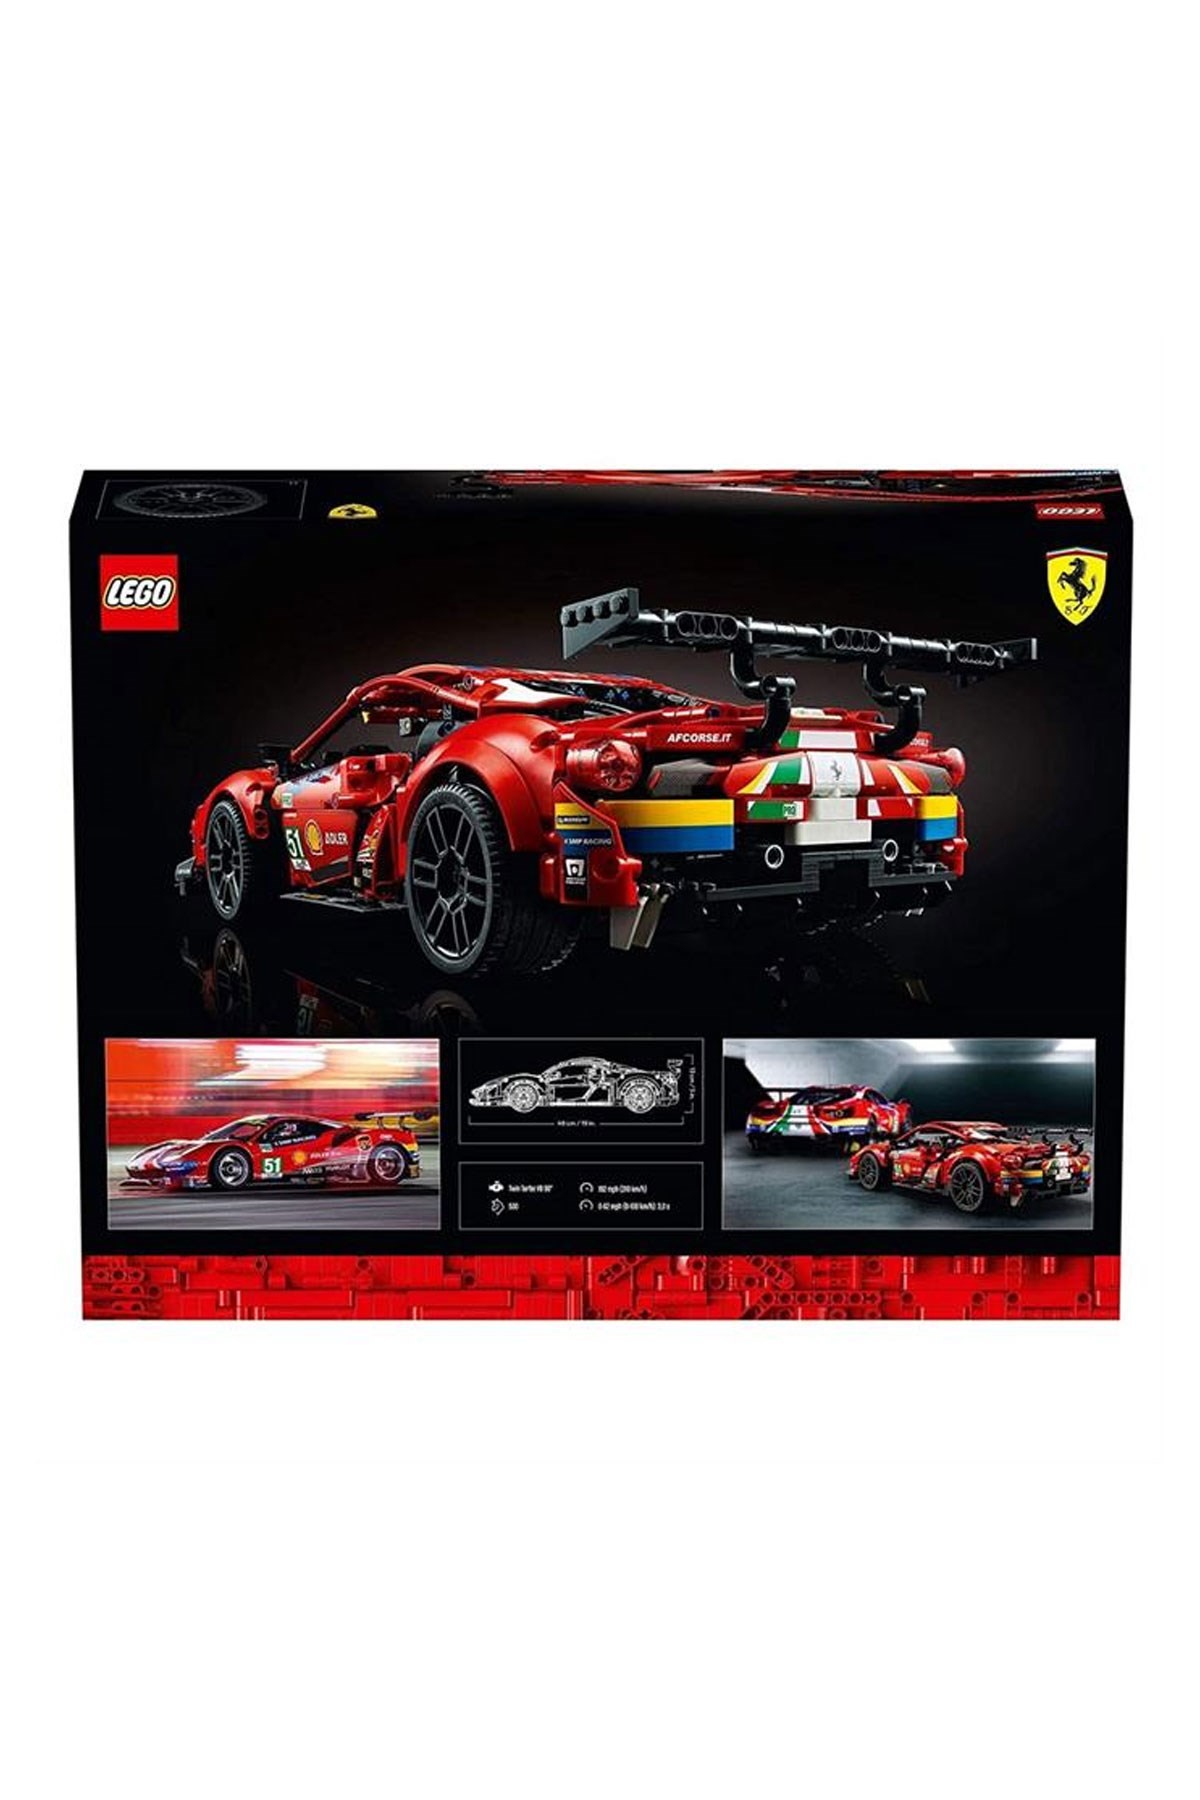 Lego Technic Ferrari 488 GTE AF Corse 51 42125